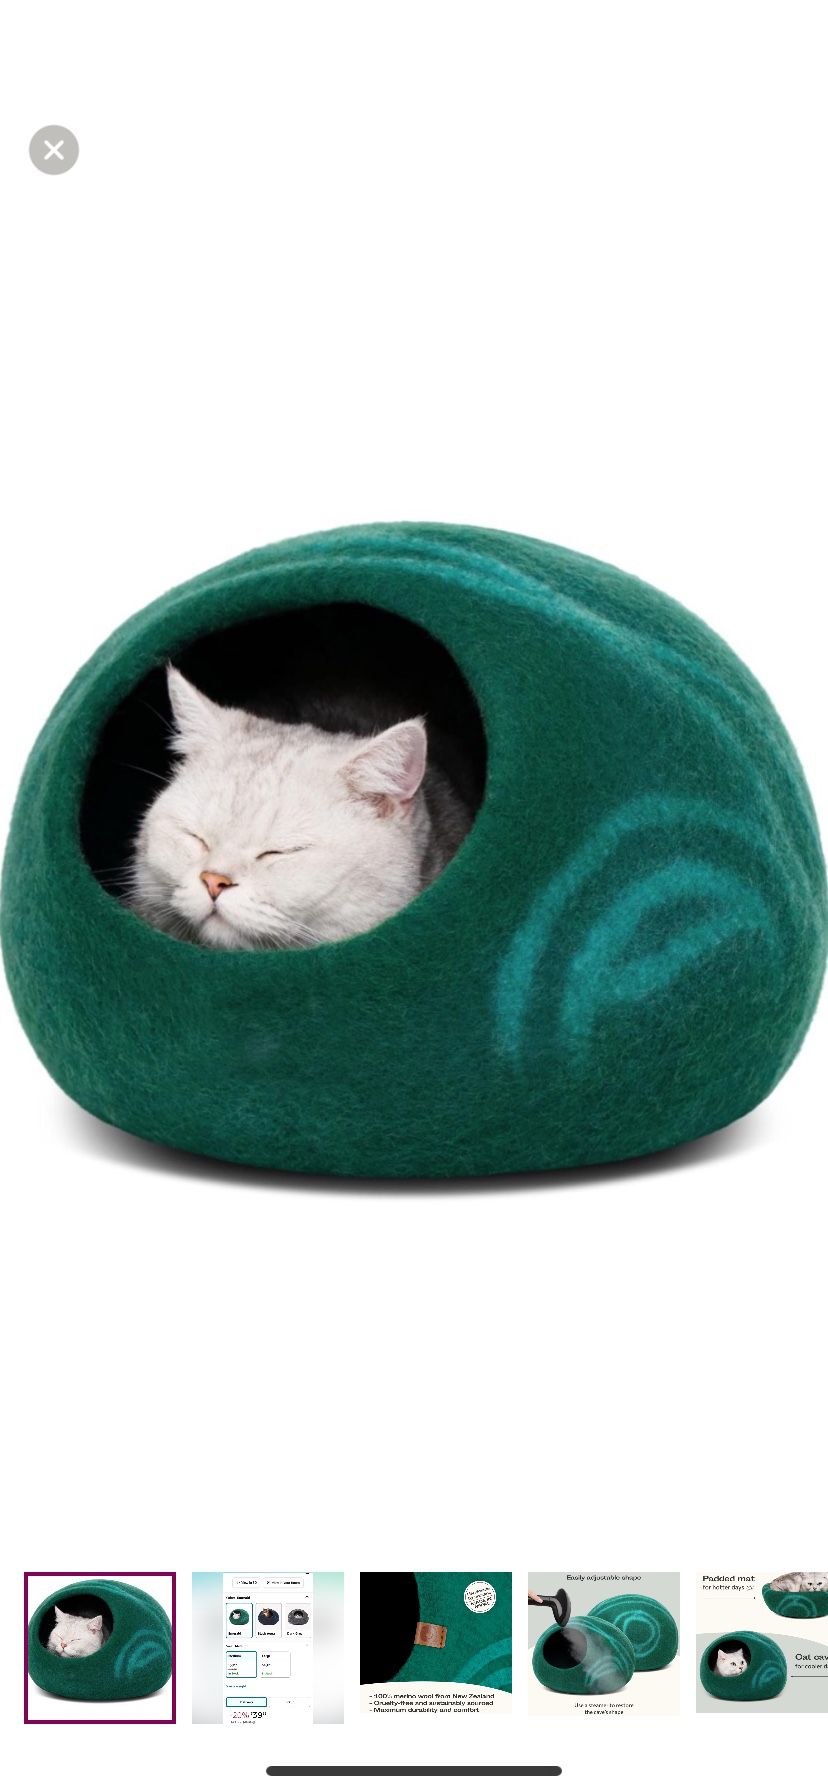 MEOWFIA Premium Felt Cat Bed Cave - Handmade 100% Merino Wool Bed for Cats